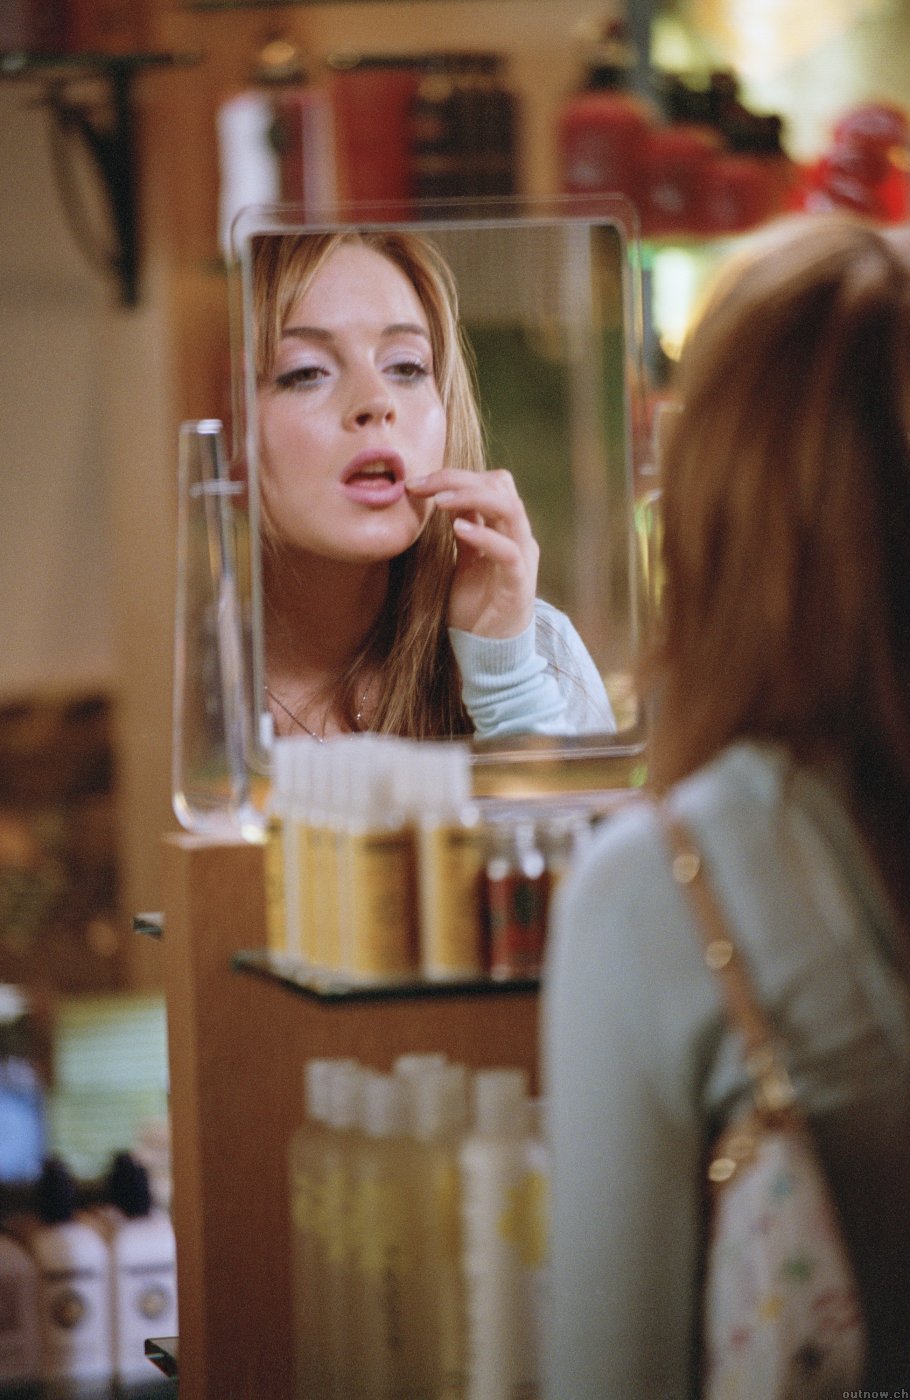 Lindsay Lohan in Mean Girls